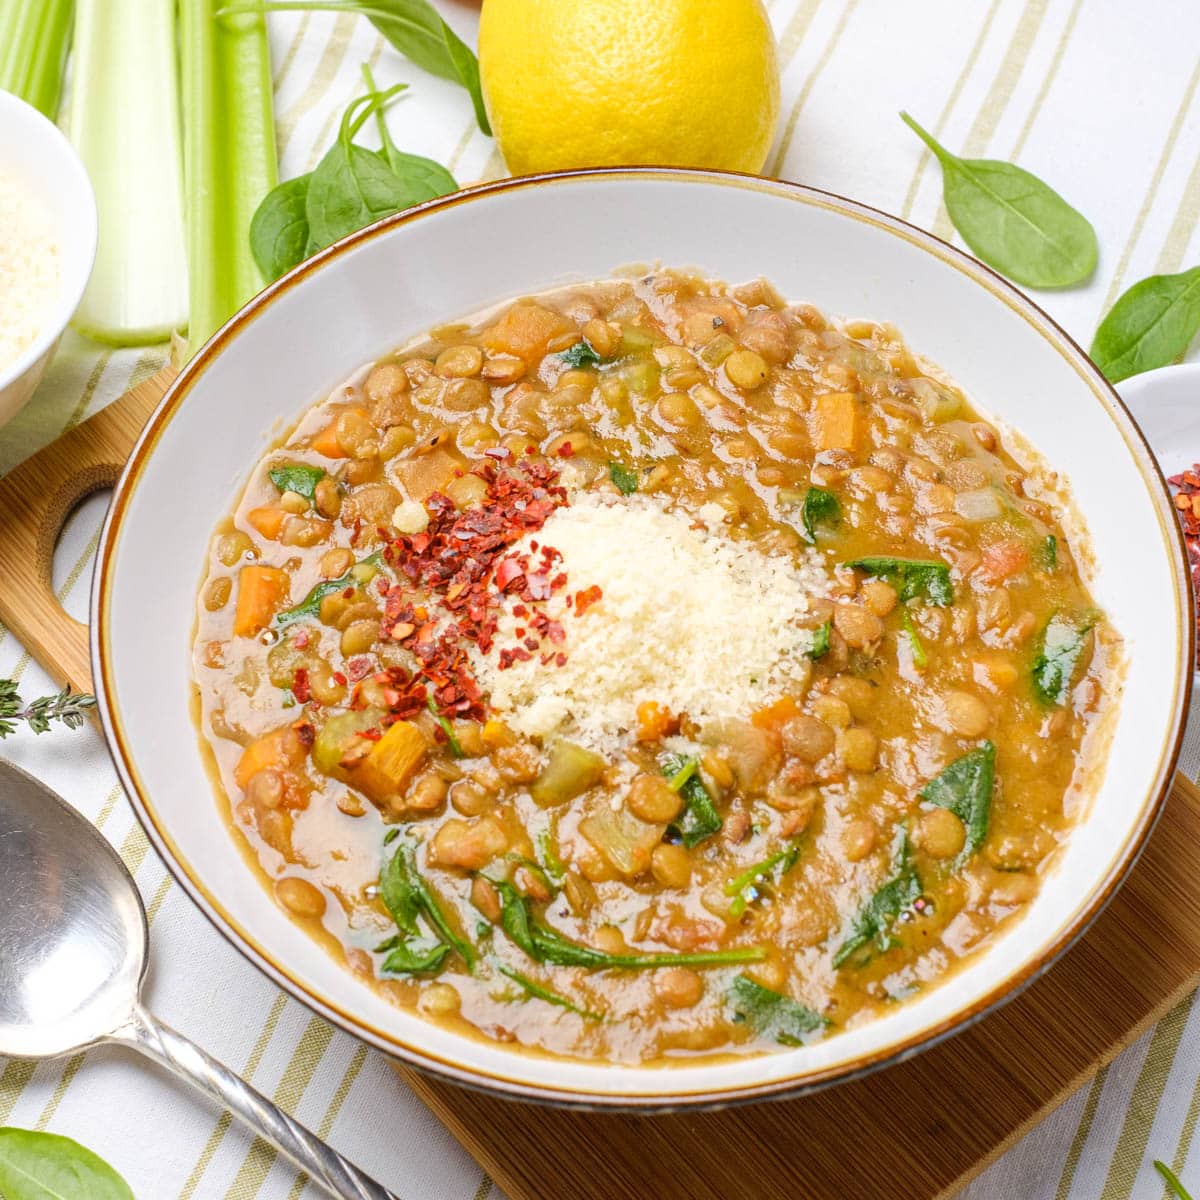 Mixed lentil soup in a bowl